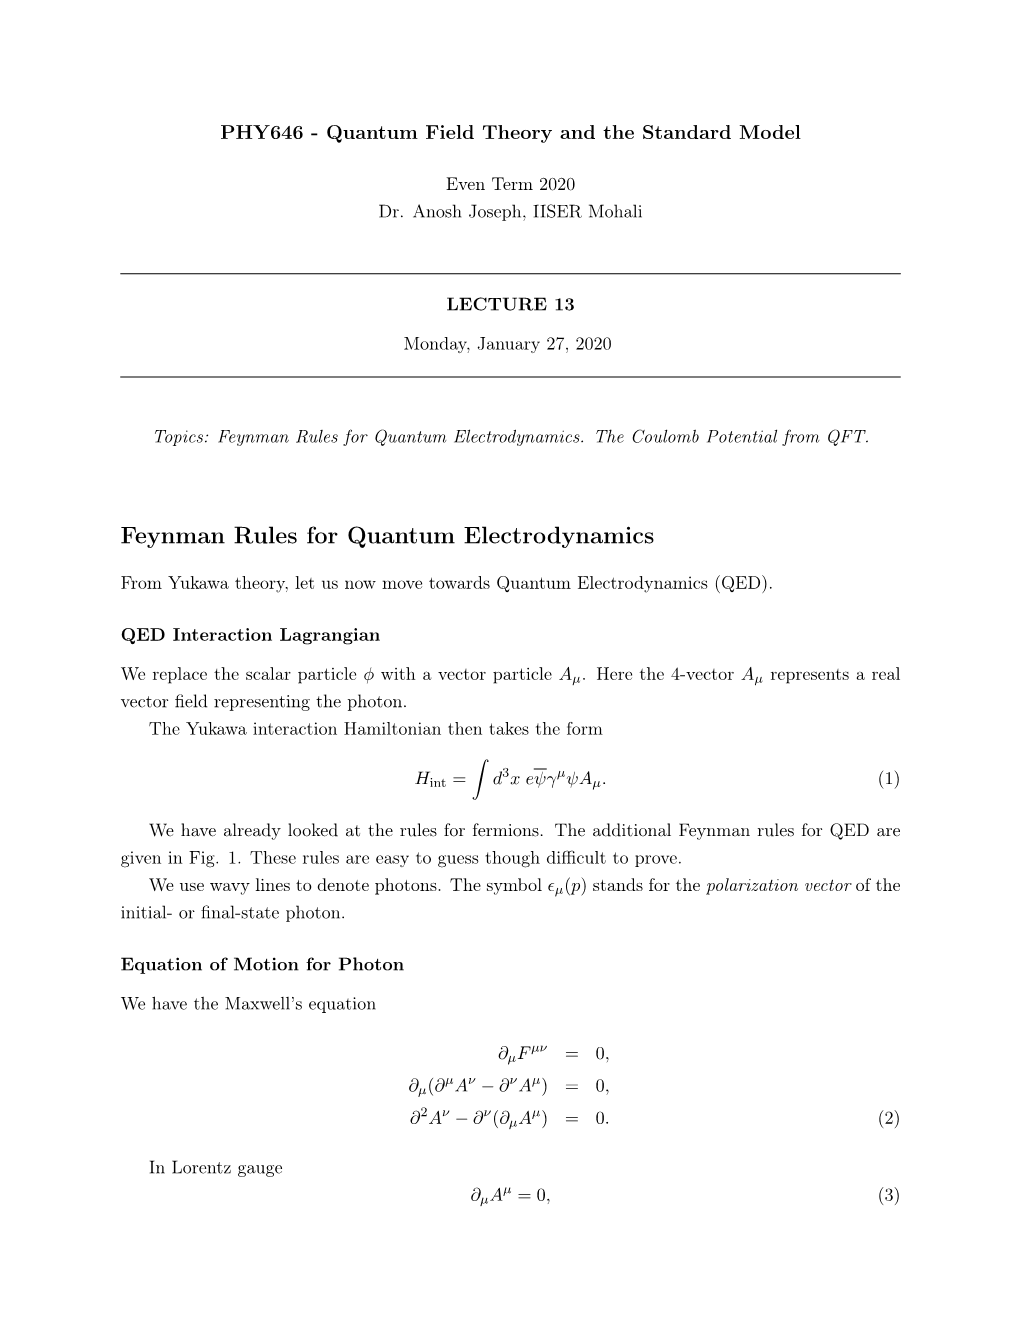 Feynman Rules for Quantum Electrodynamics